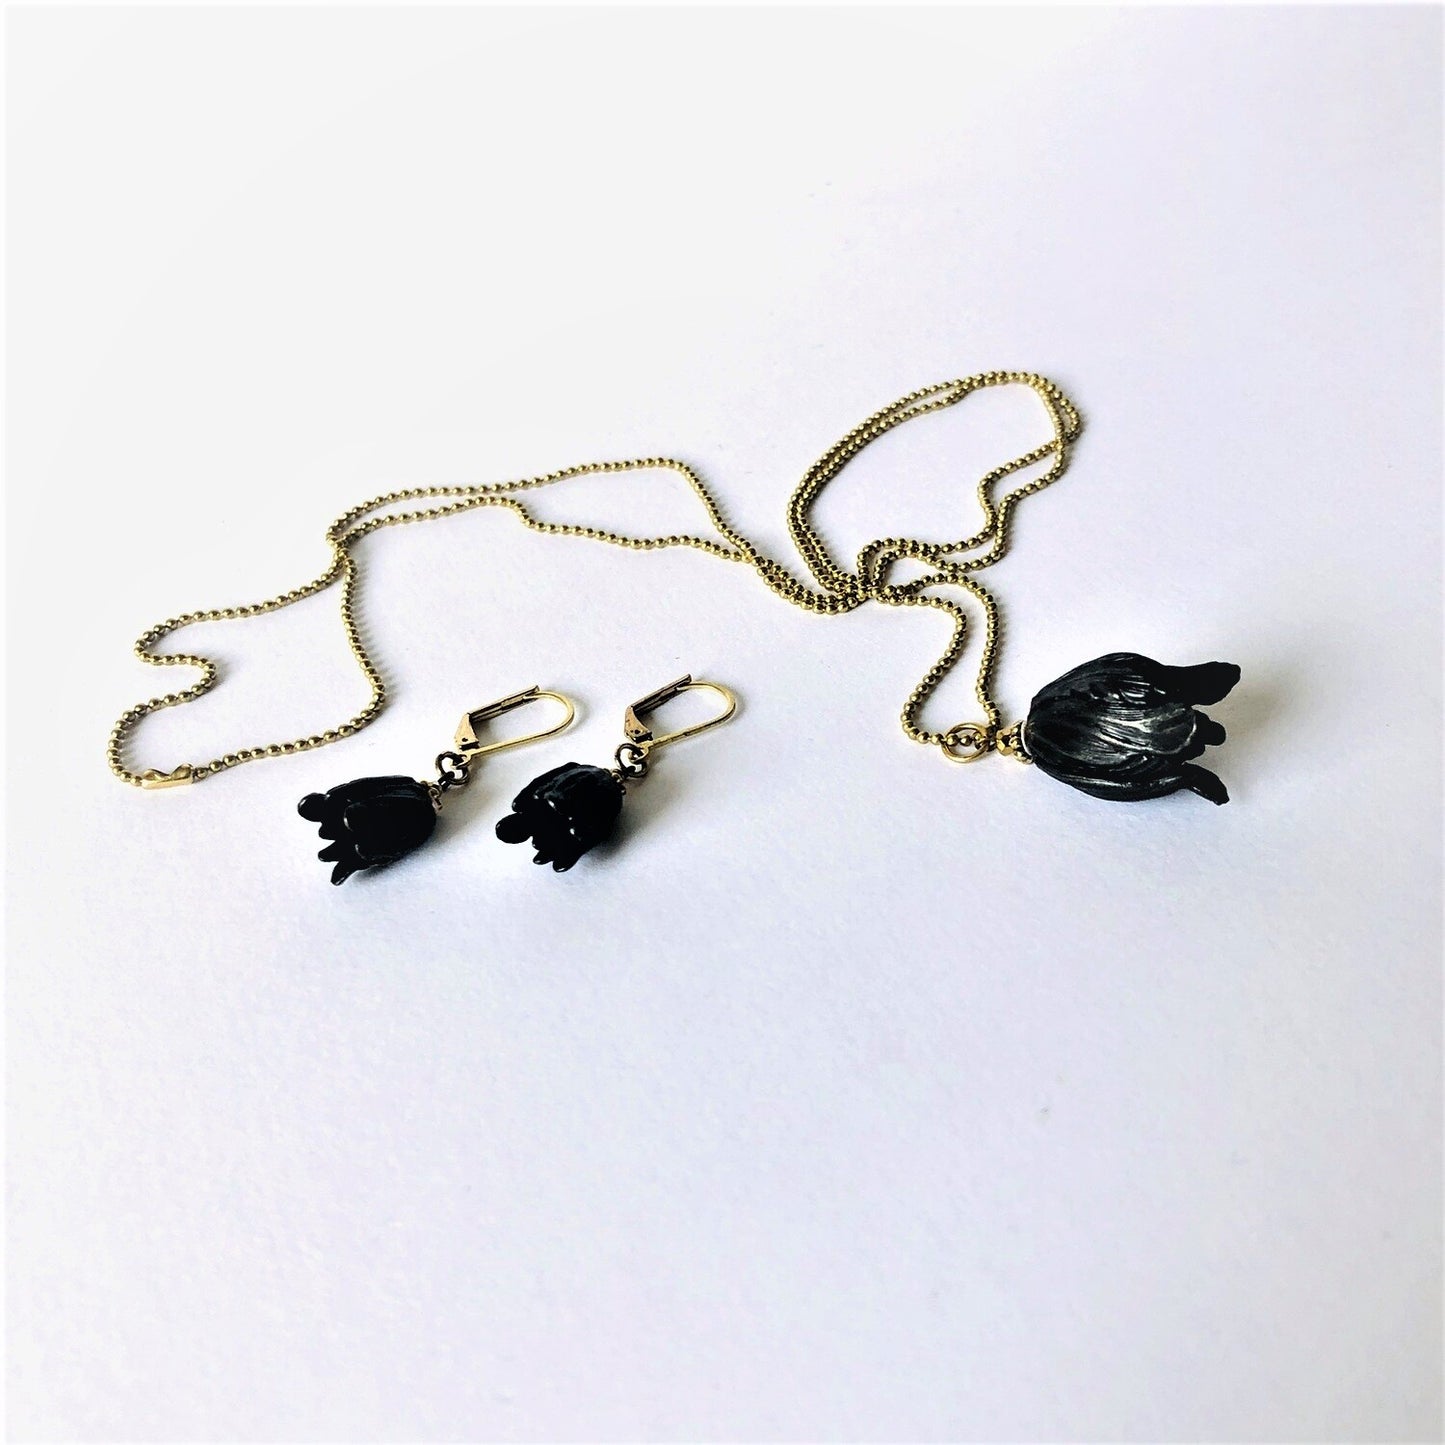 Black tulip ball chain & earrings